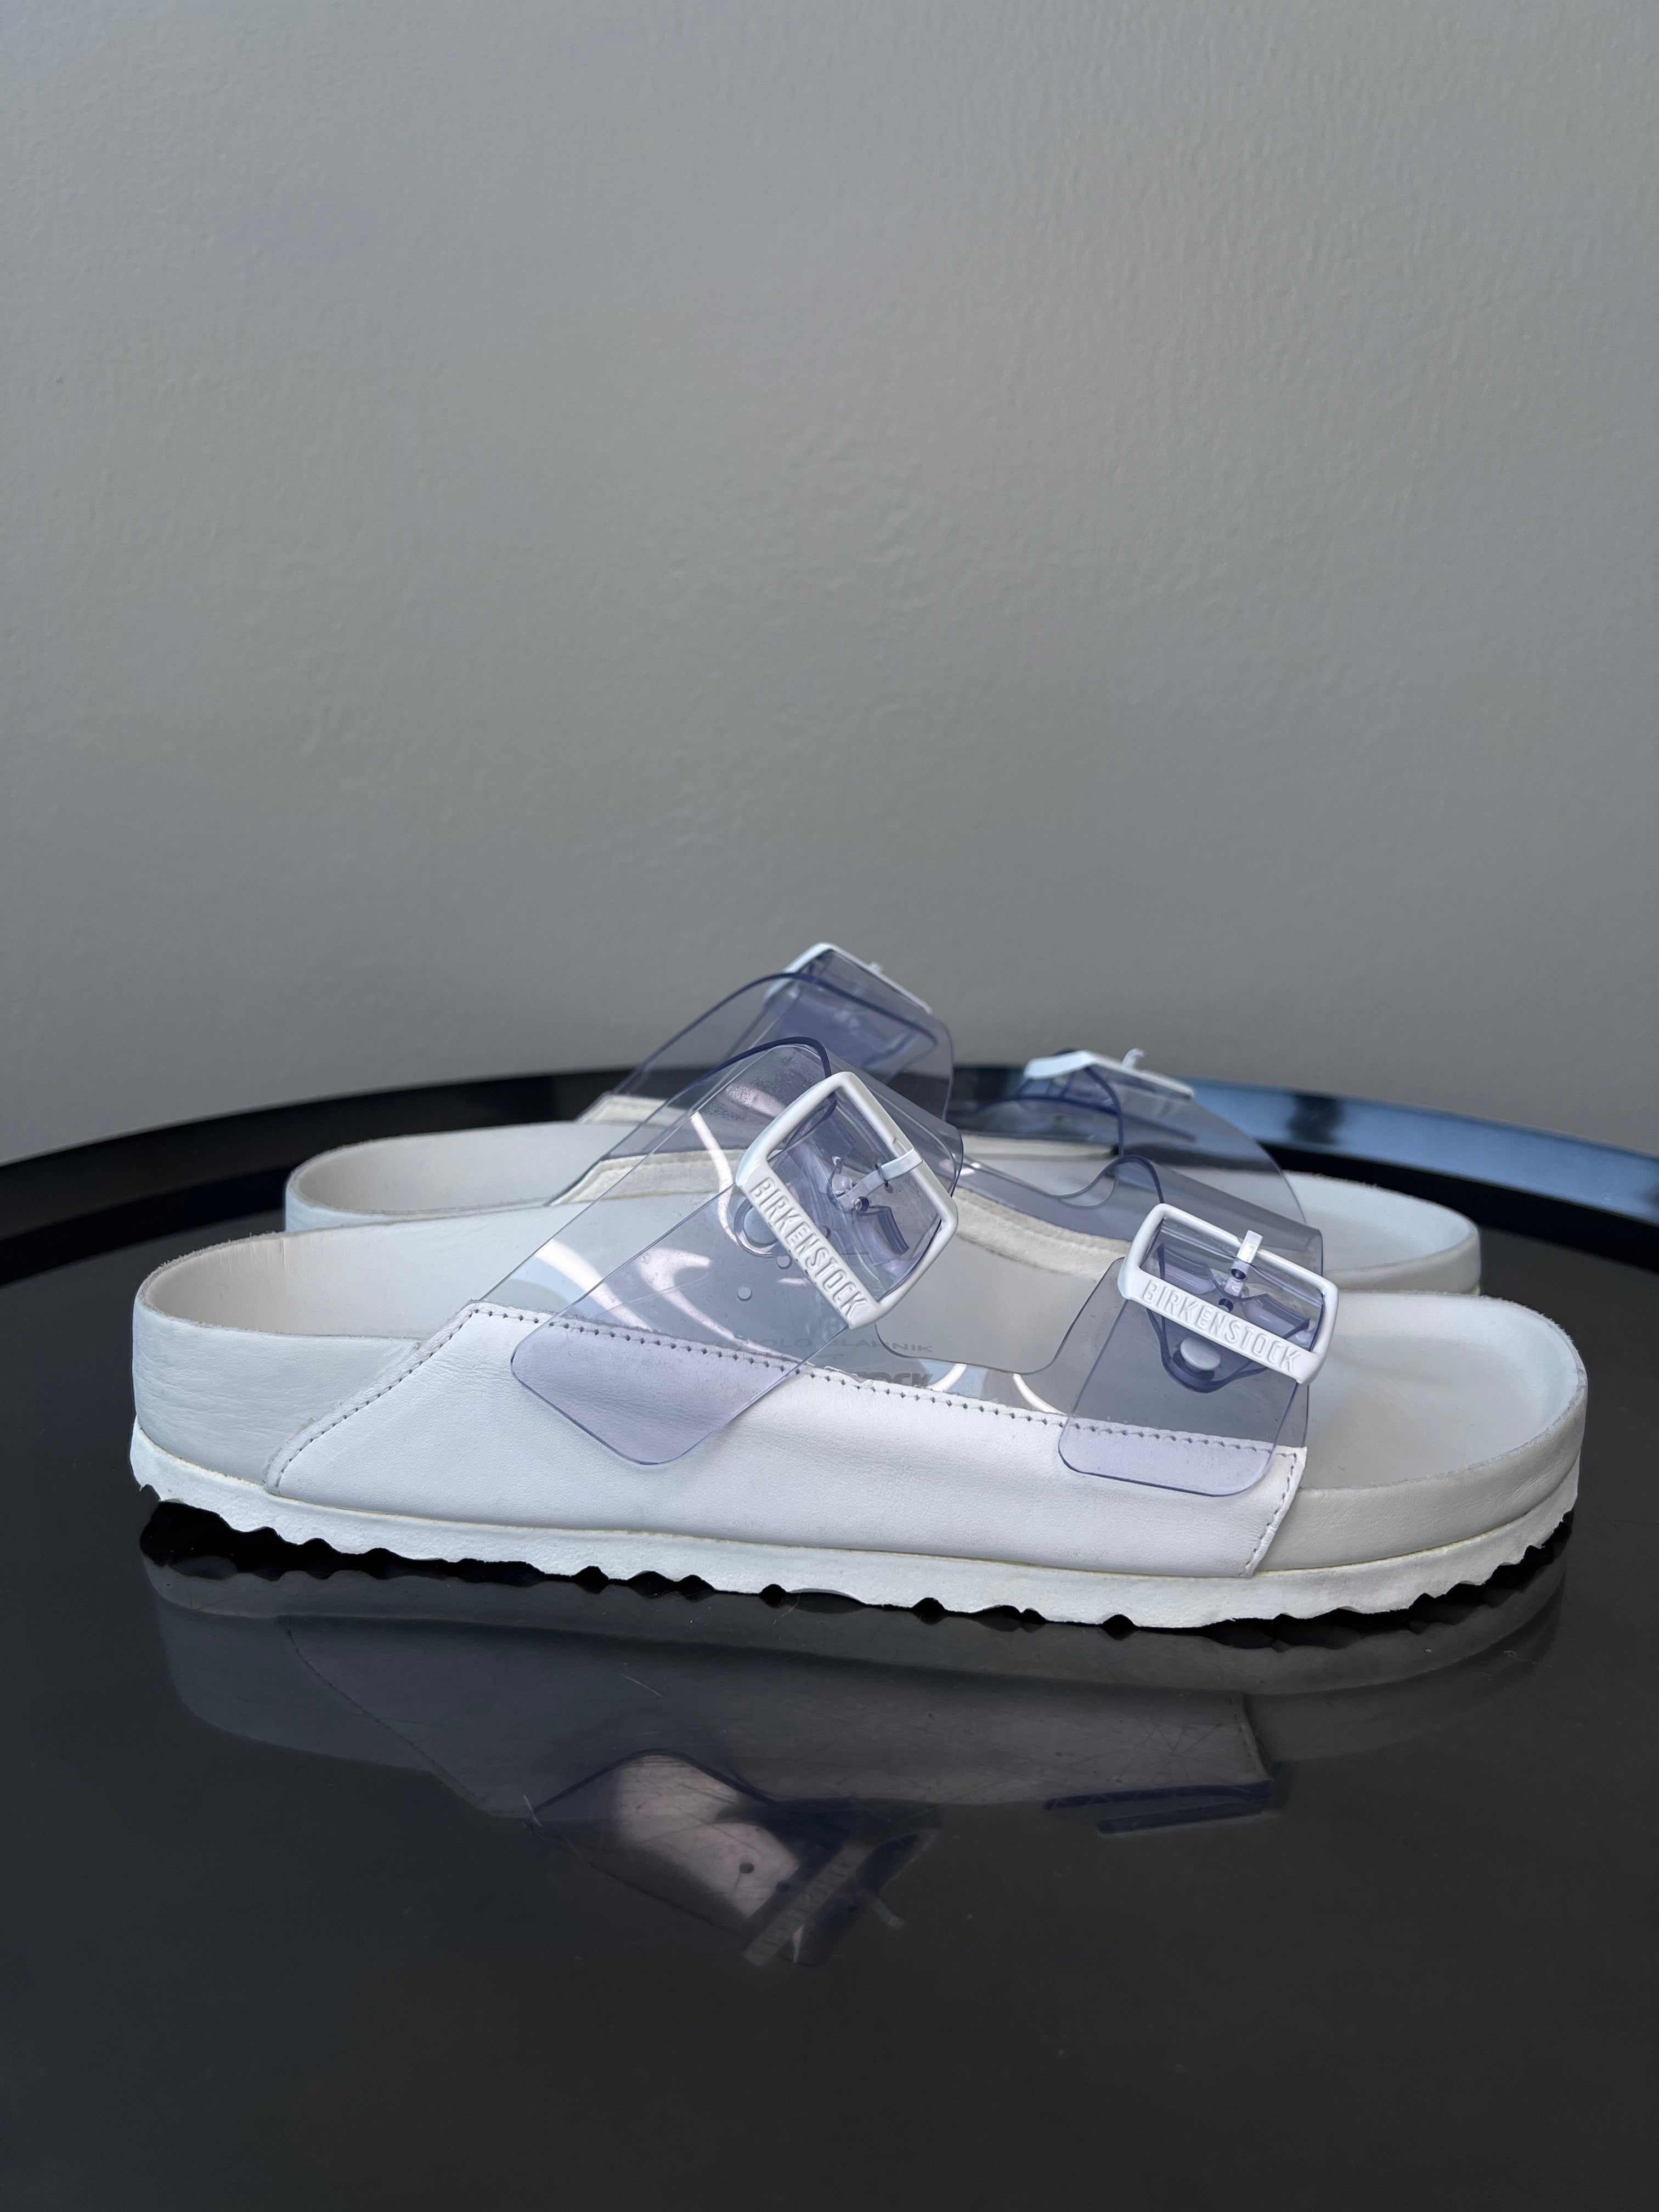 Manolo Blahnik Arizona Transparent PVC Flat Sandals - Birkenstock